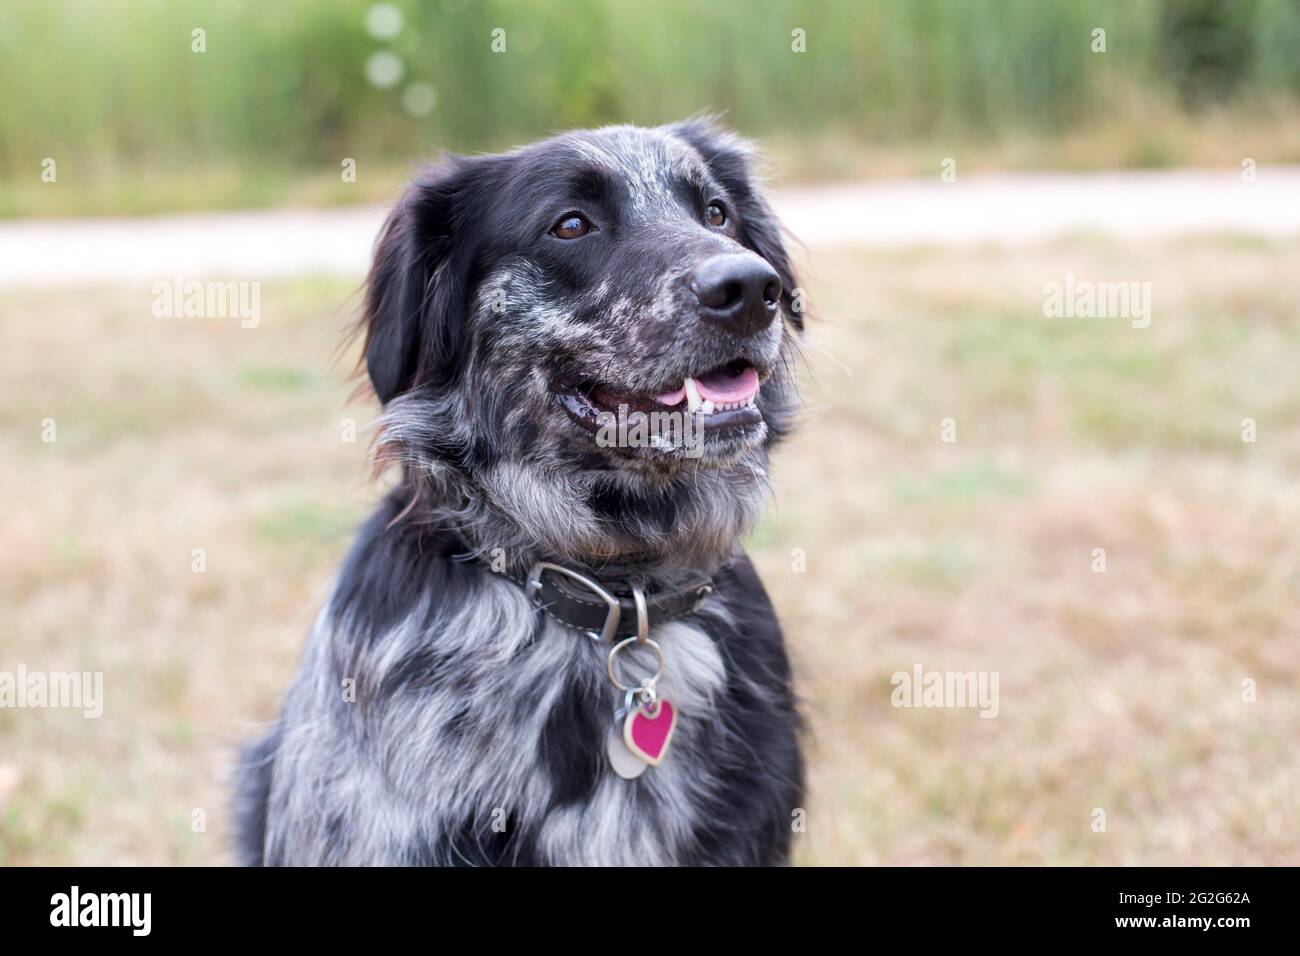 Un cane australiano Shepherd mix oscuro si siede in zona erbosa Foto Stock